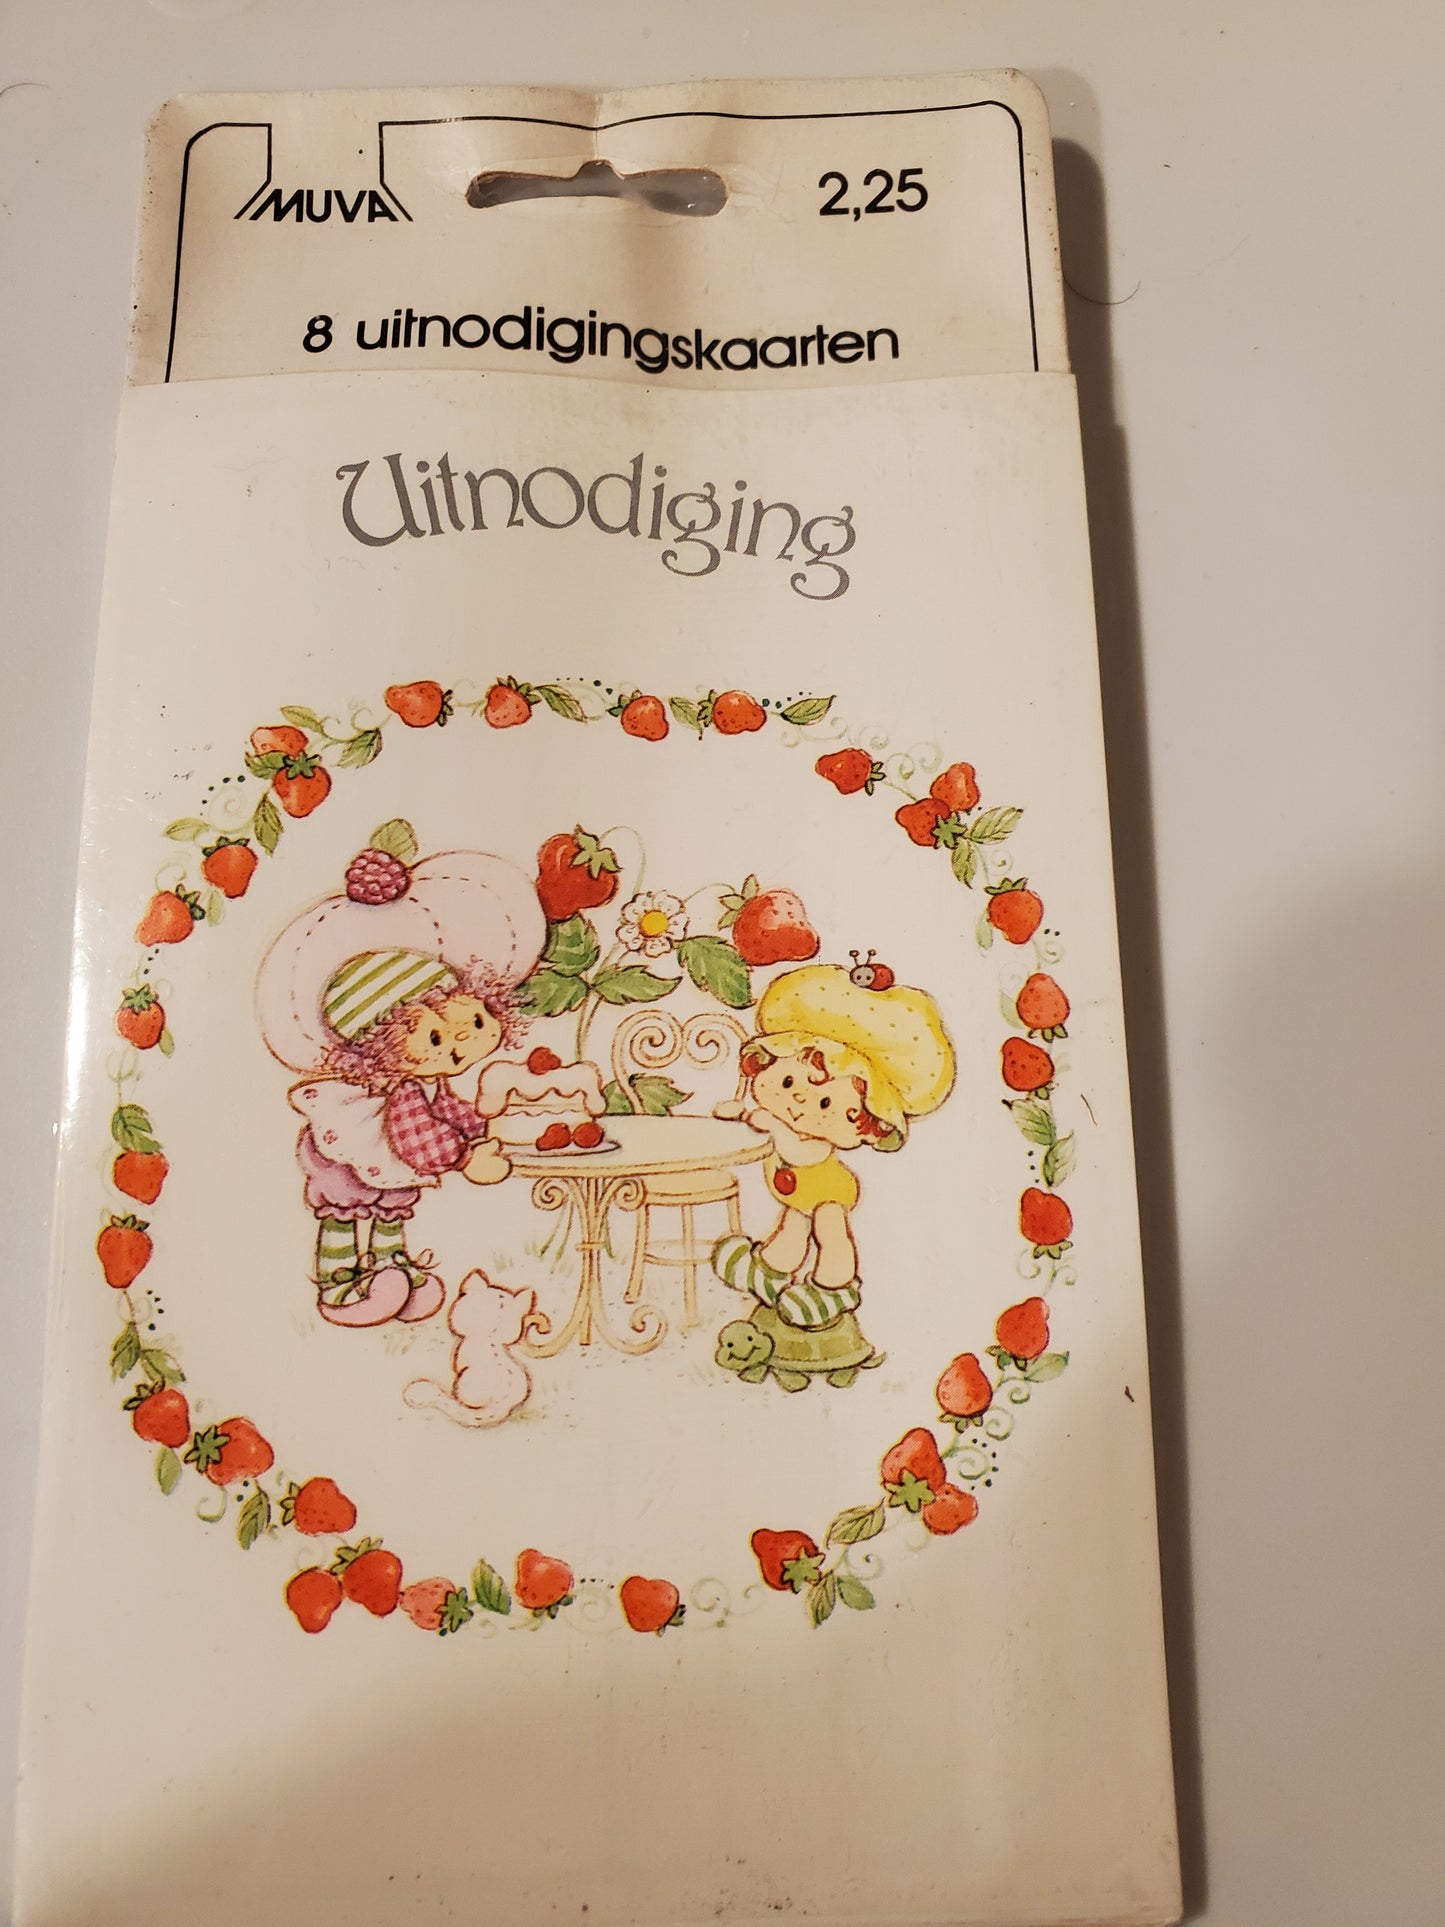 Stationary - Mint in Box - Strawberry Shortcake - Foreign - Denmark?